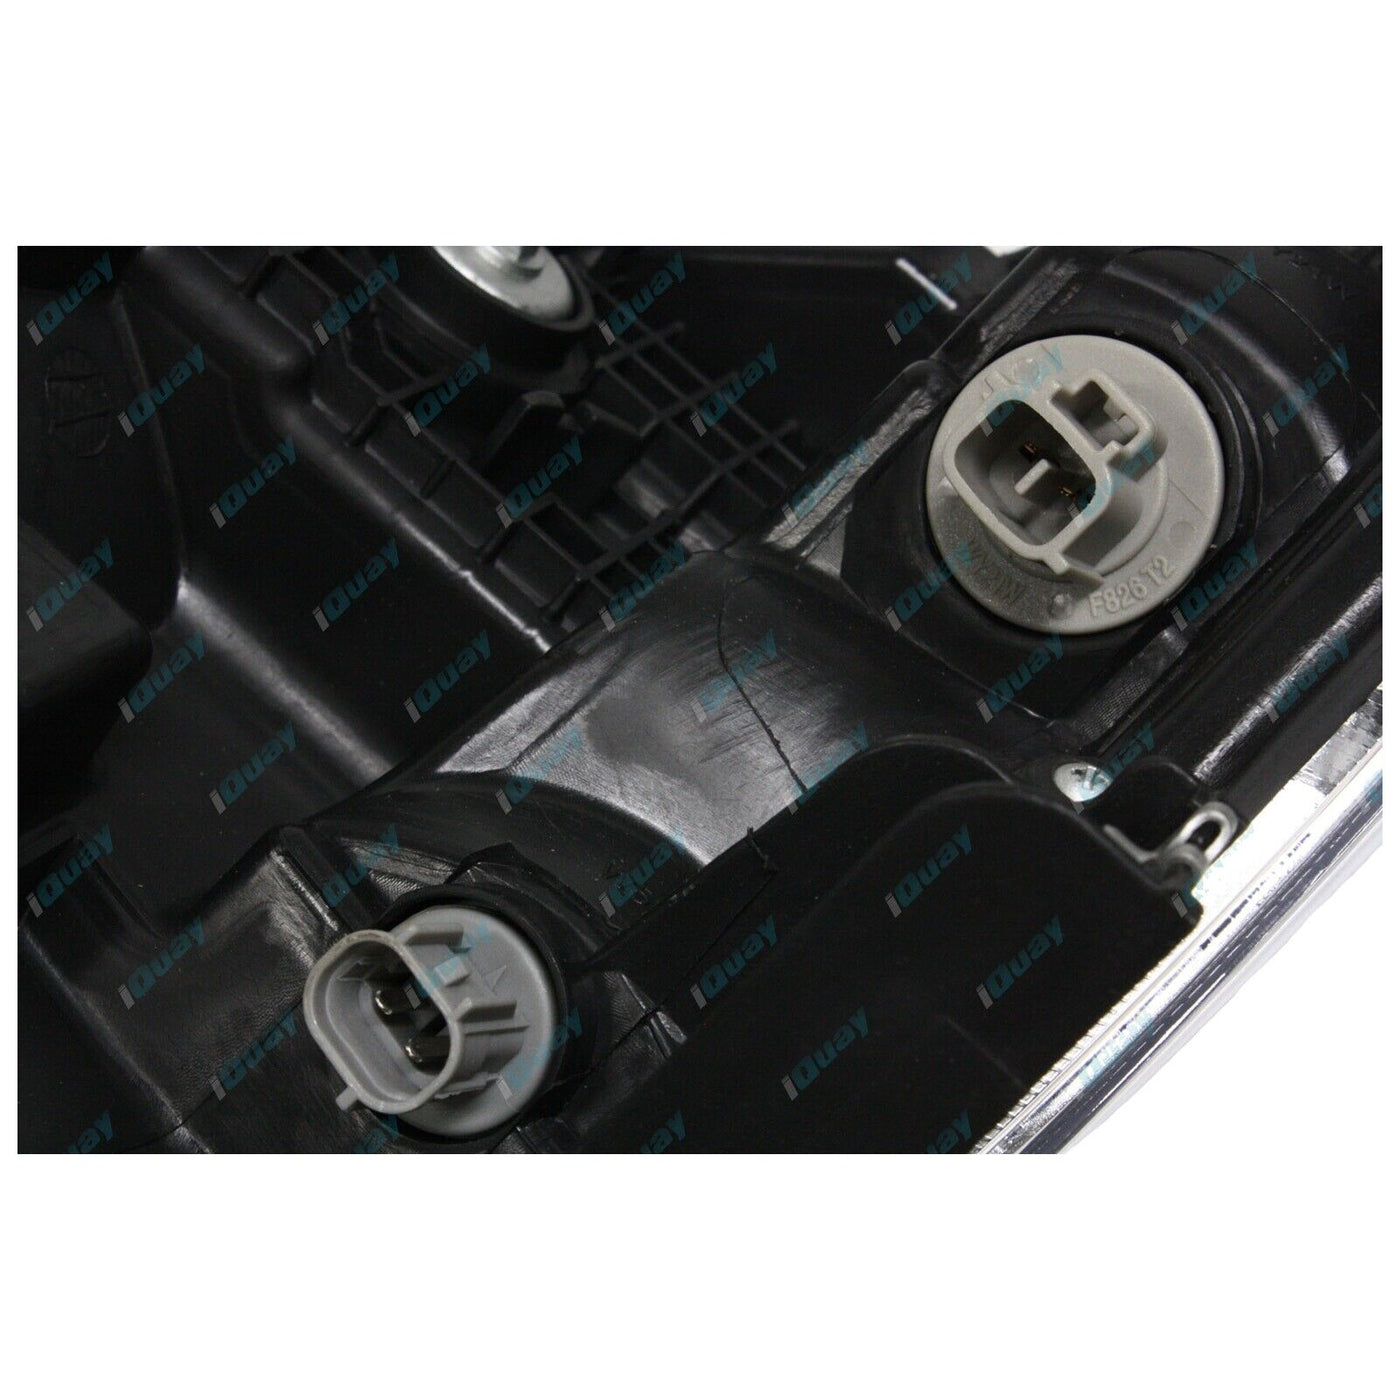 Headlight Suitable for Toyota Hilux SR & SR5 2012-2015 (Driver Side) - OZI4X4 PTY LTD